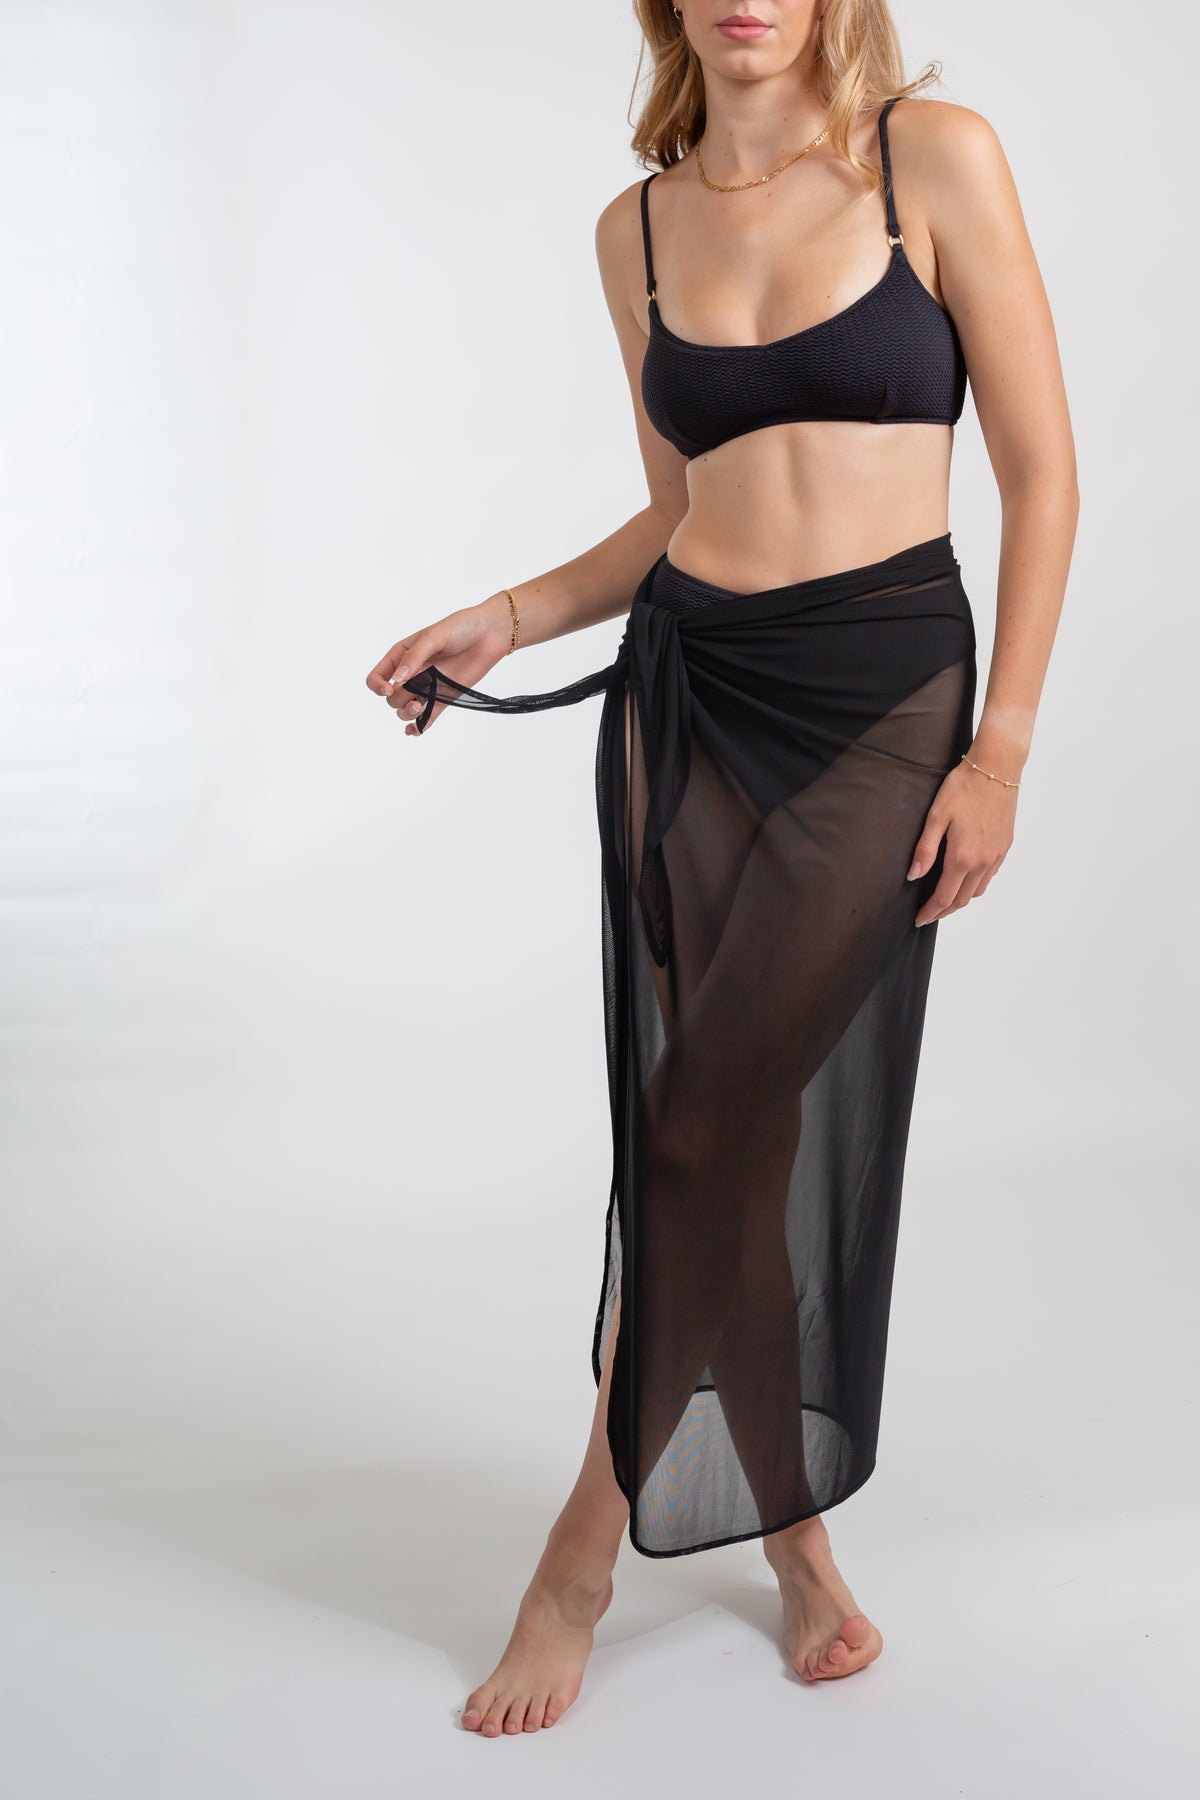 Koy resort escape mesh long wrap sarong skirt beach cover up for women in black.